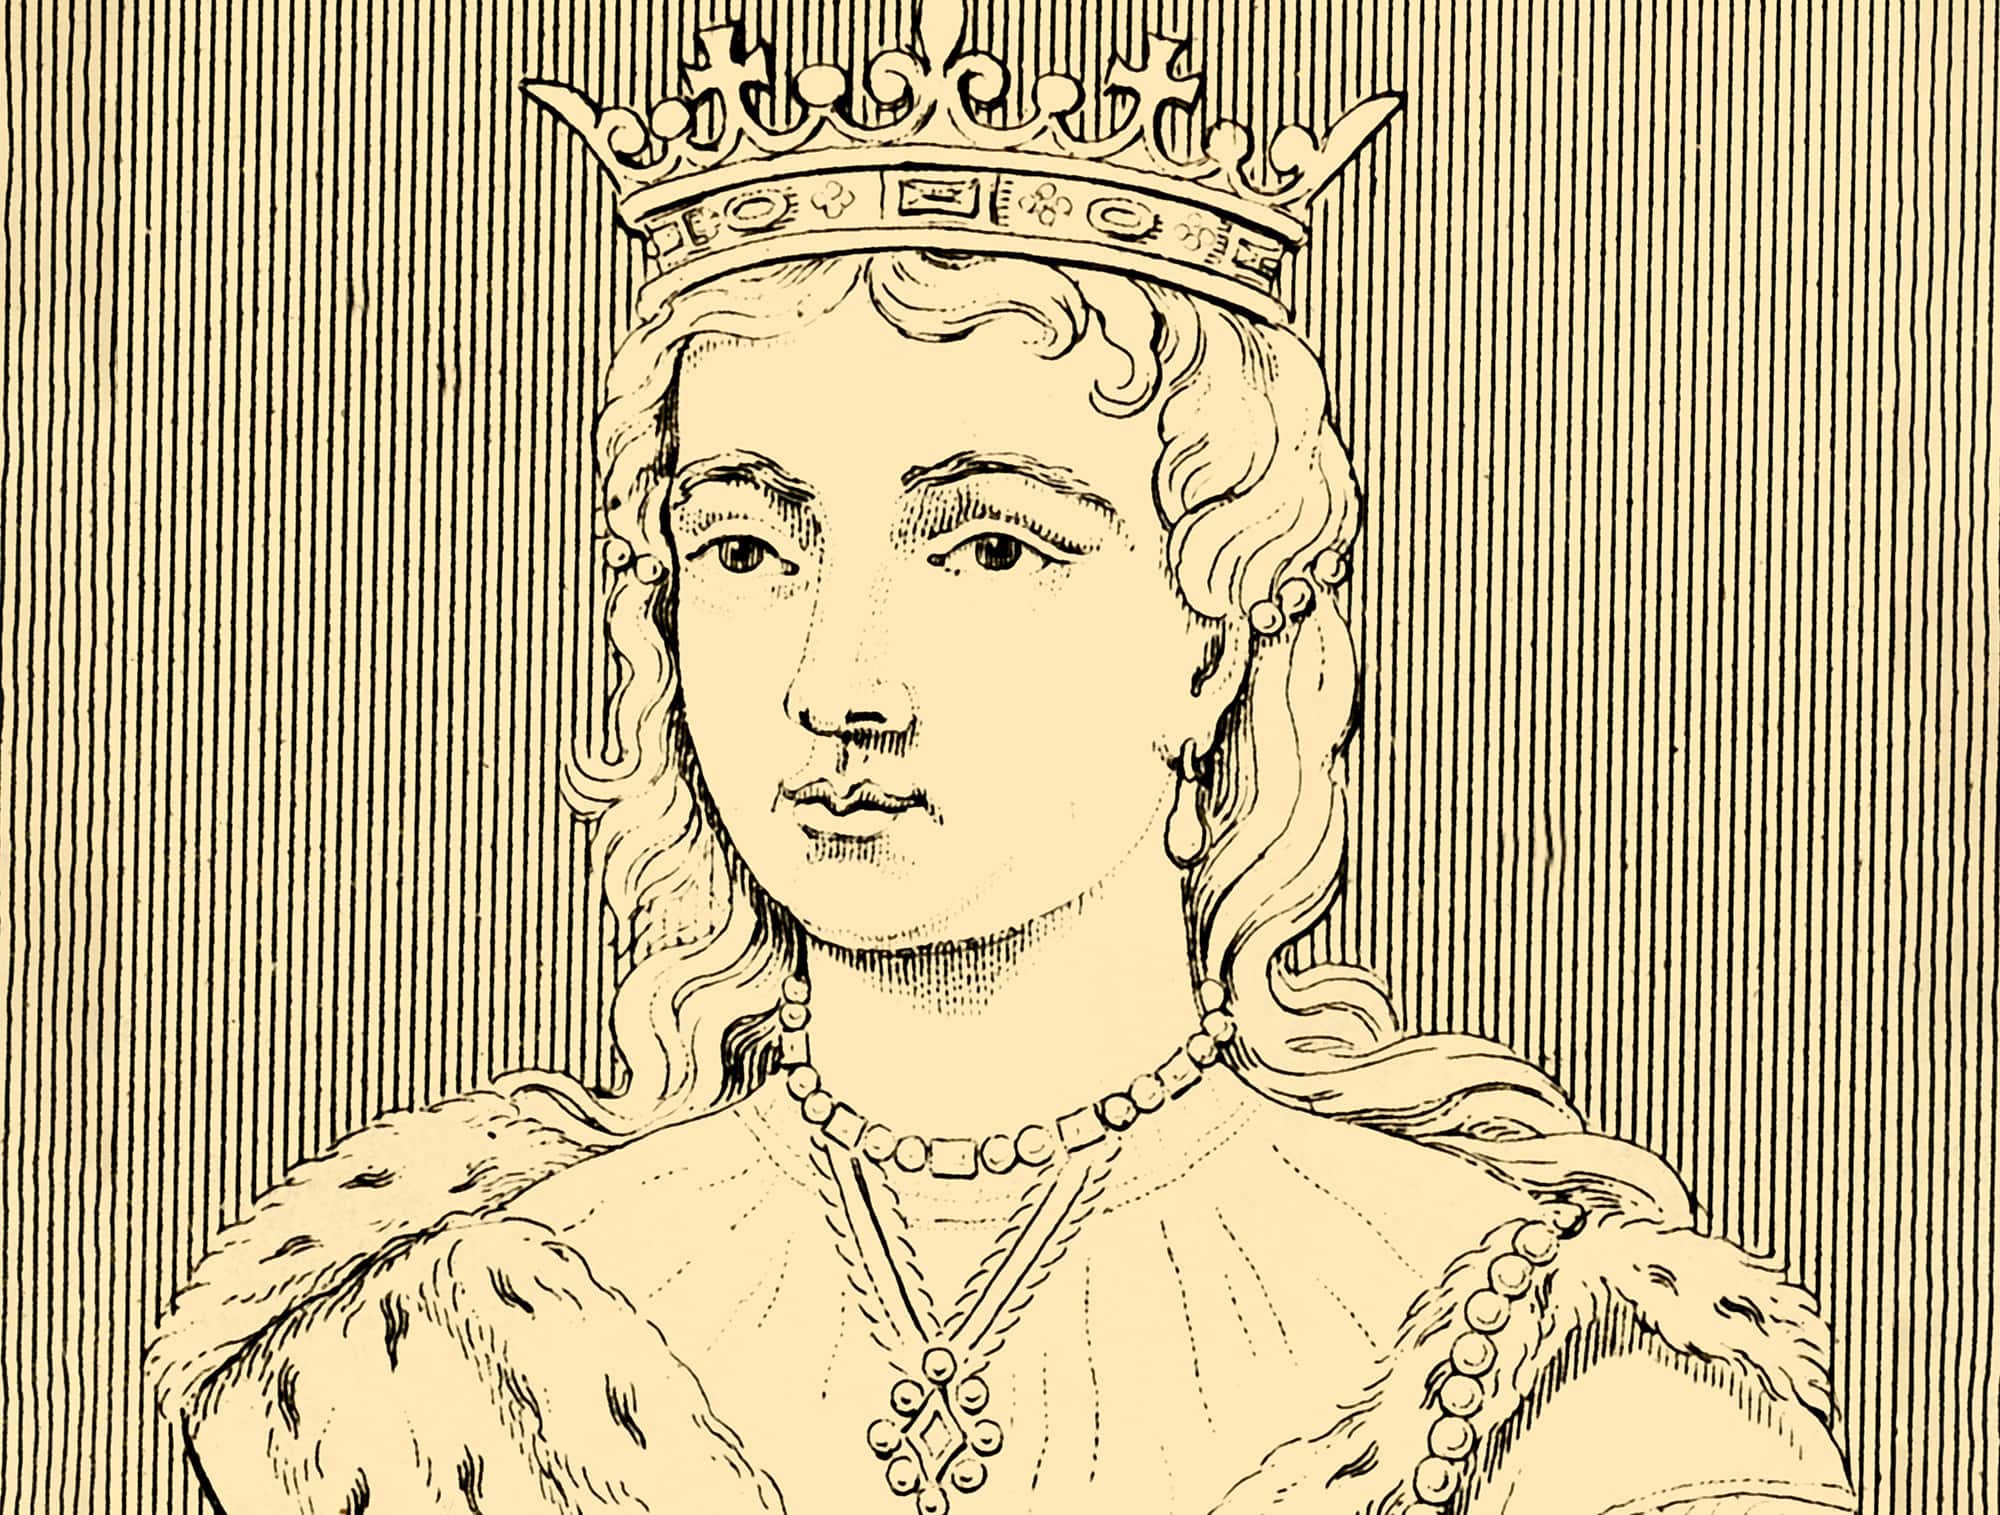 Margaret of Anjou facts